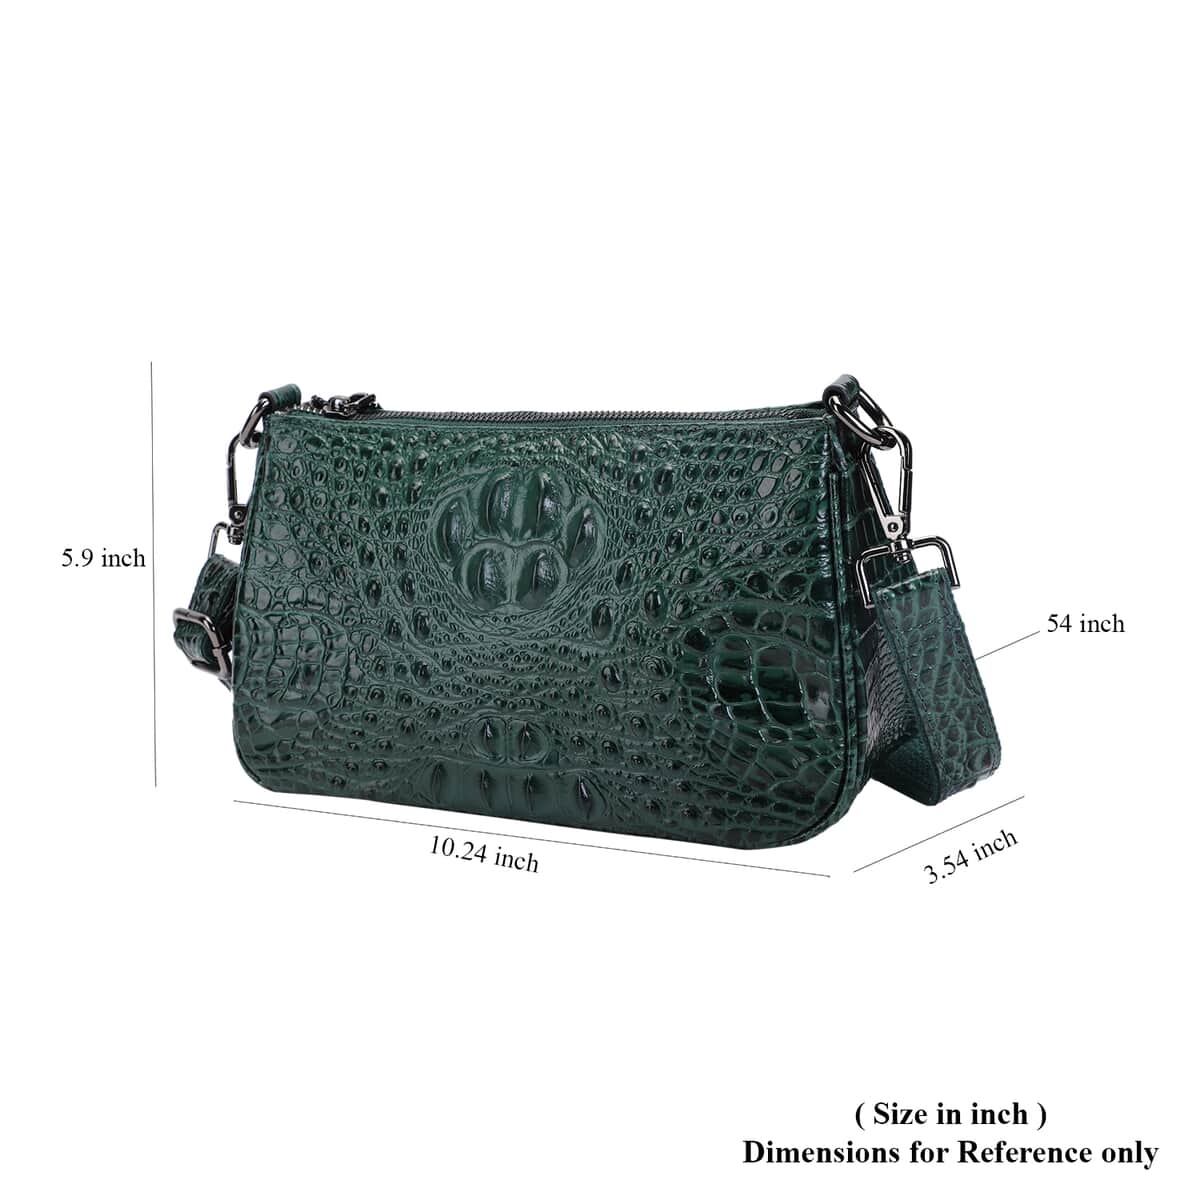 Black Crocodile Skin Pattern Genuine Leather Hobo Bag (10.24"x3.54"x5.9") image number 6